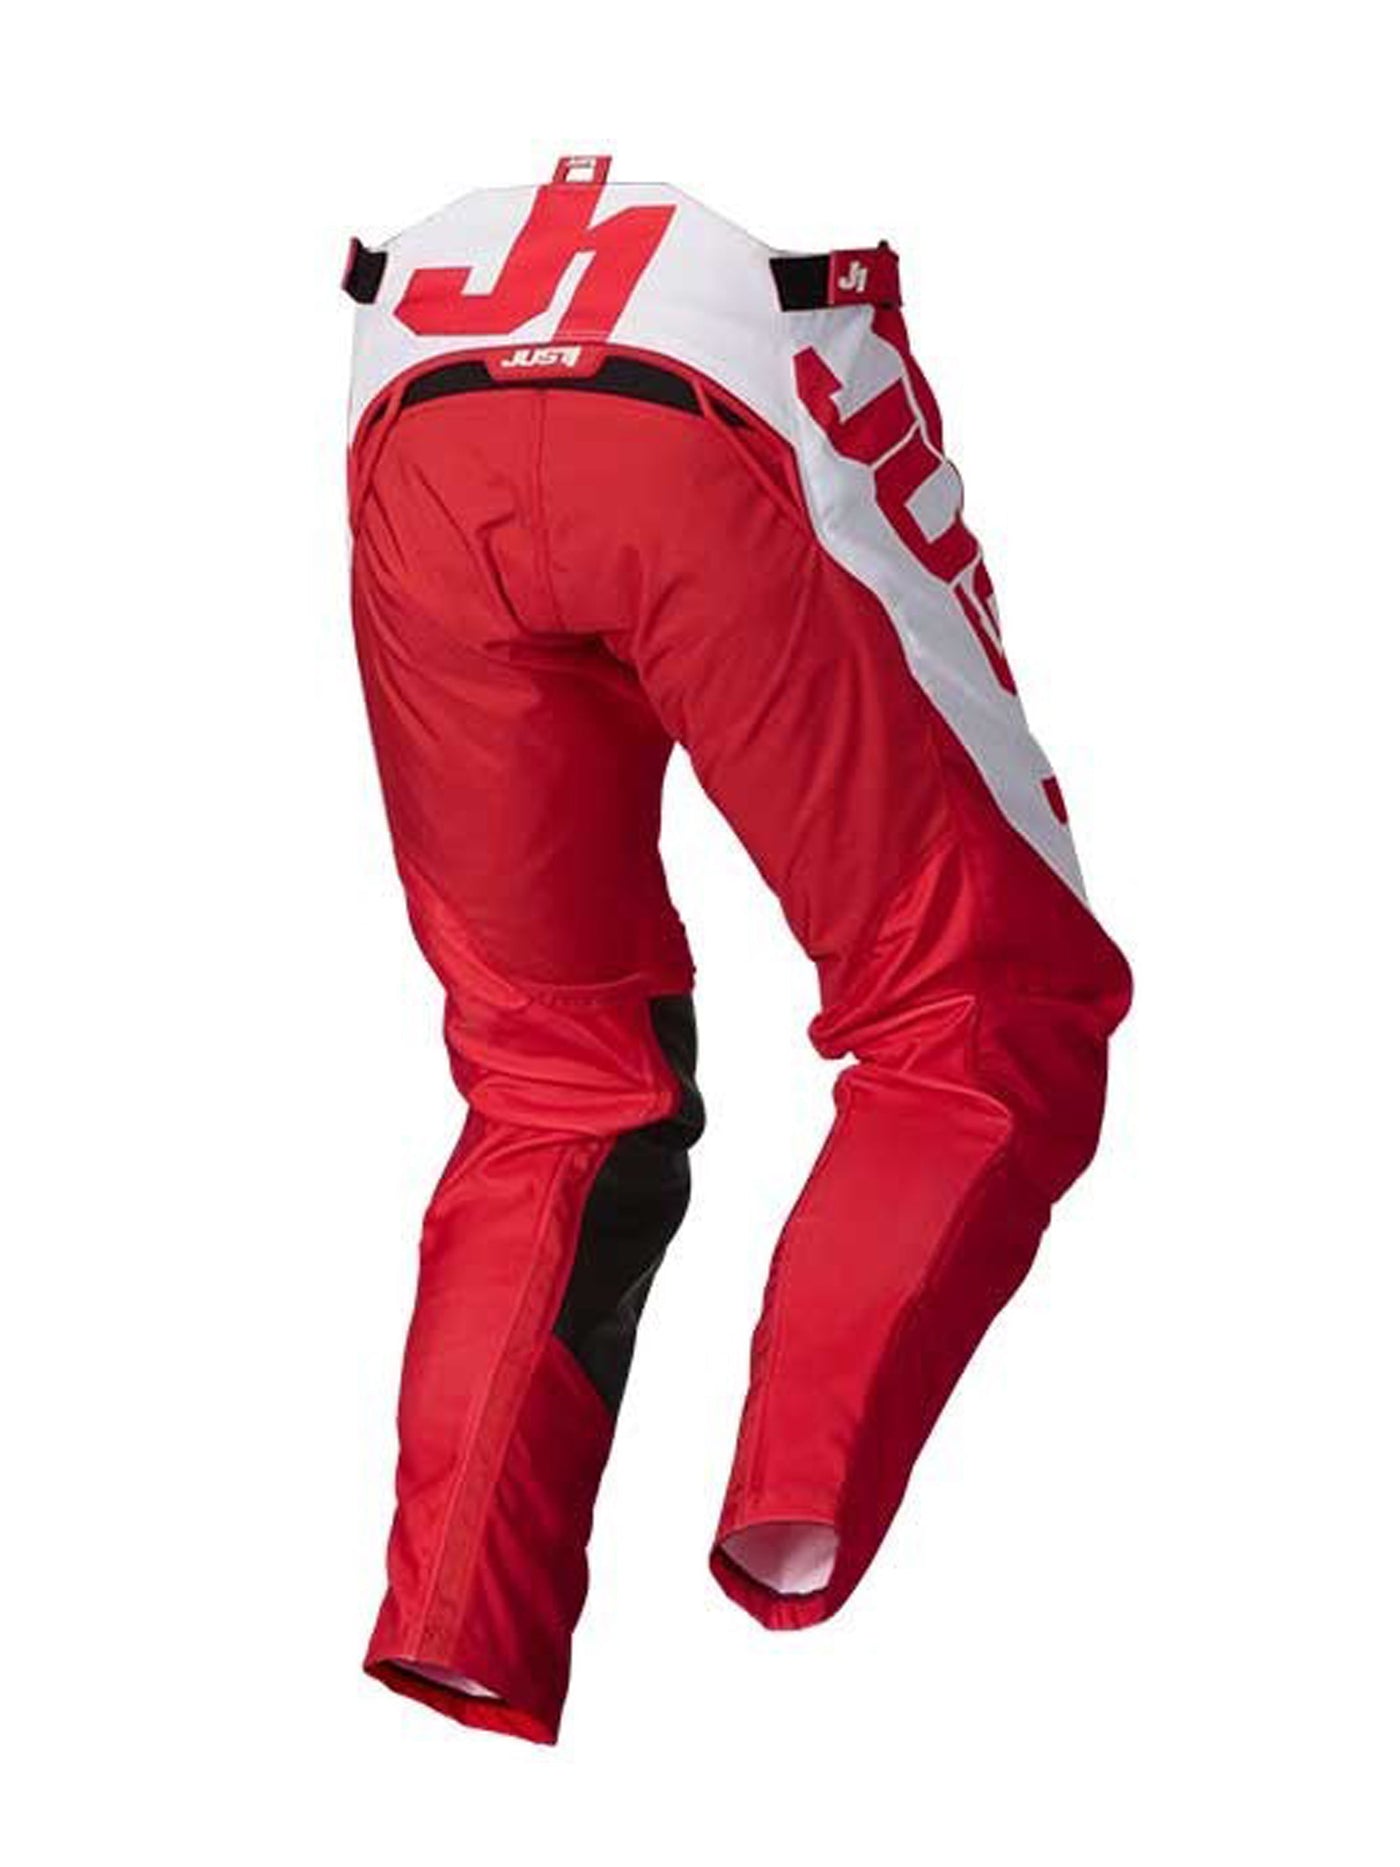  Just1 Pantalones J-Force Vertigo Rojo-Blanco